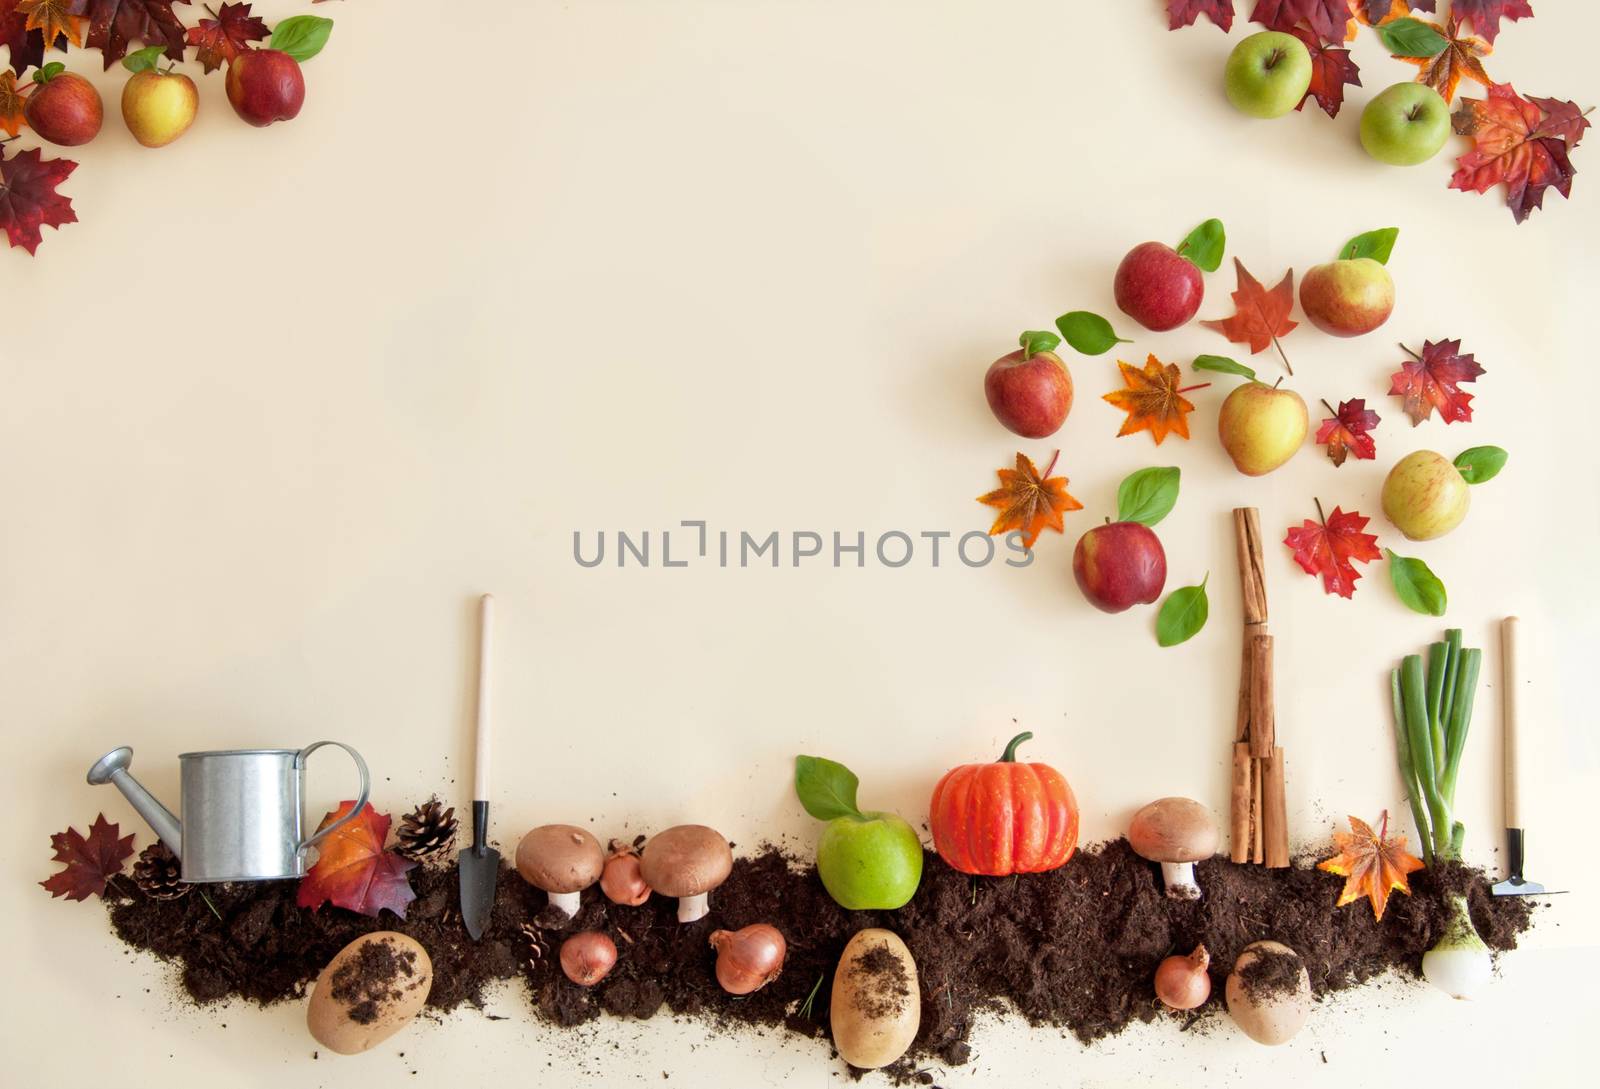 Autumn fruit and vegetable garden by unikpix